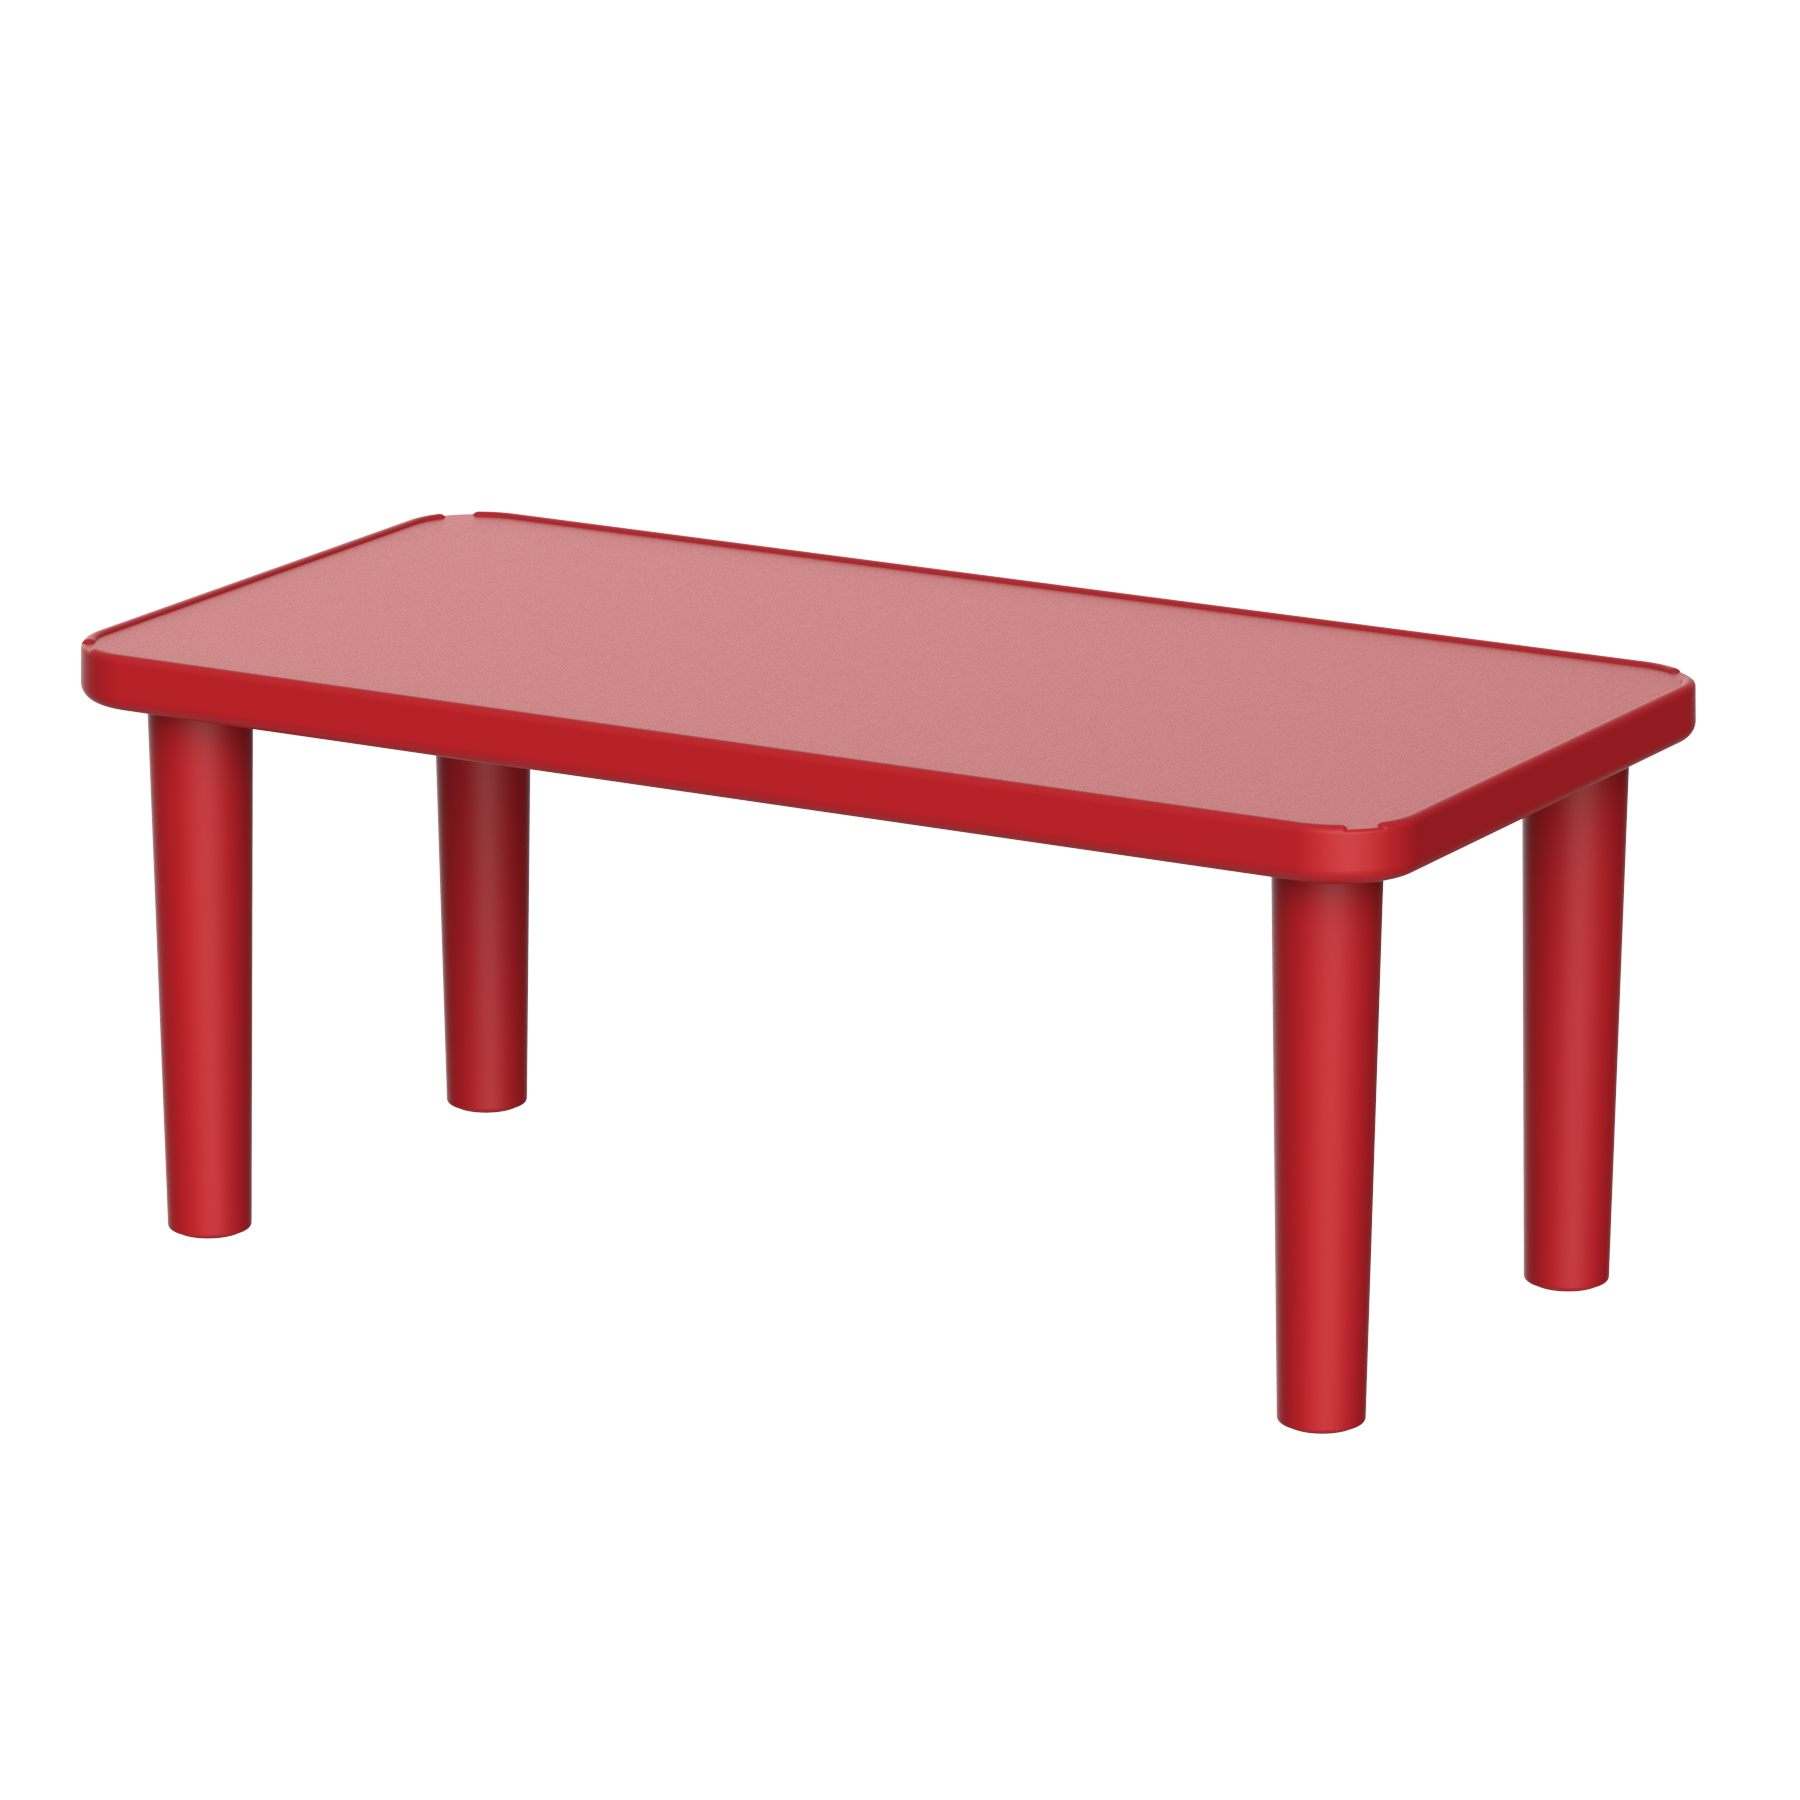 Duramax Kindergarten Table Duramax Kindergarten Table - Rectangle Red